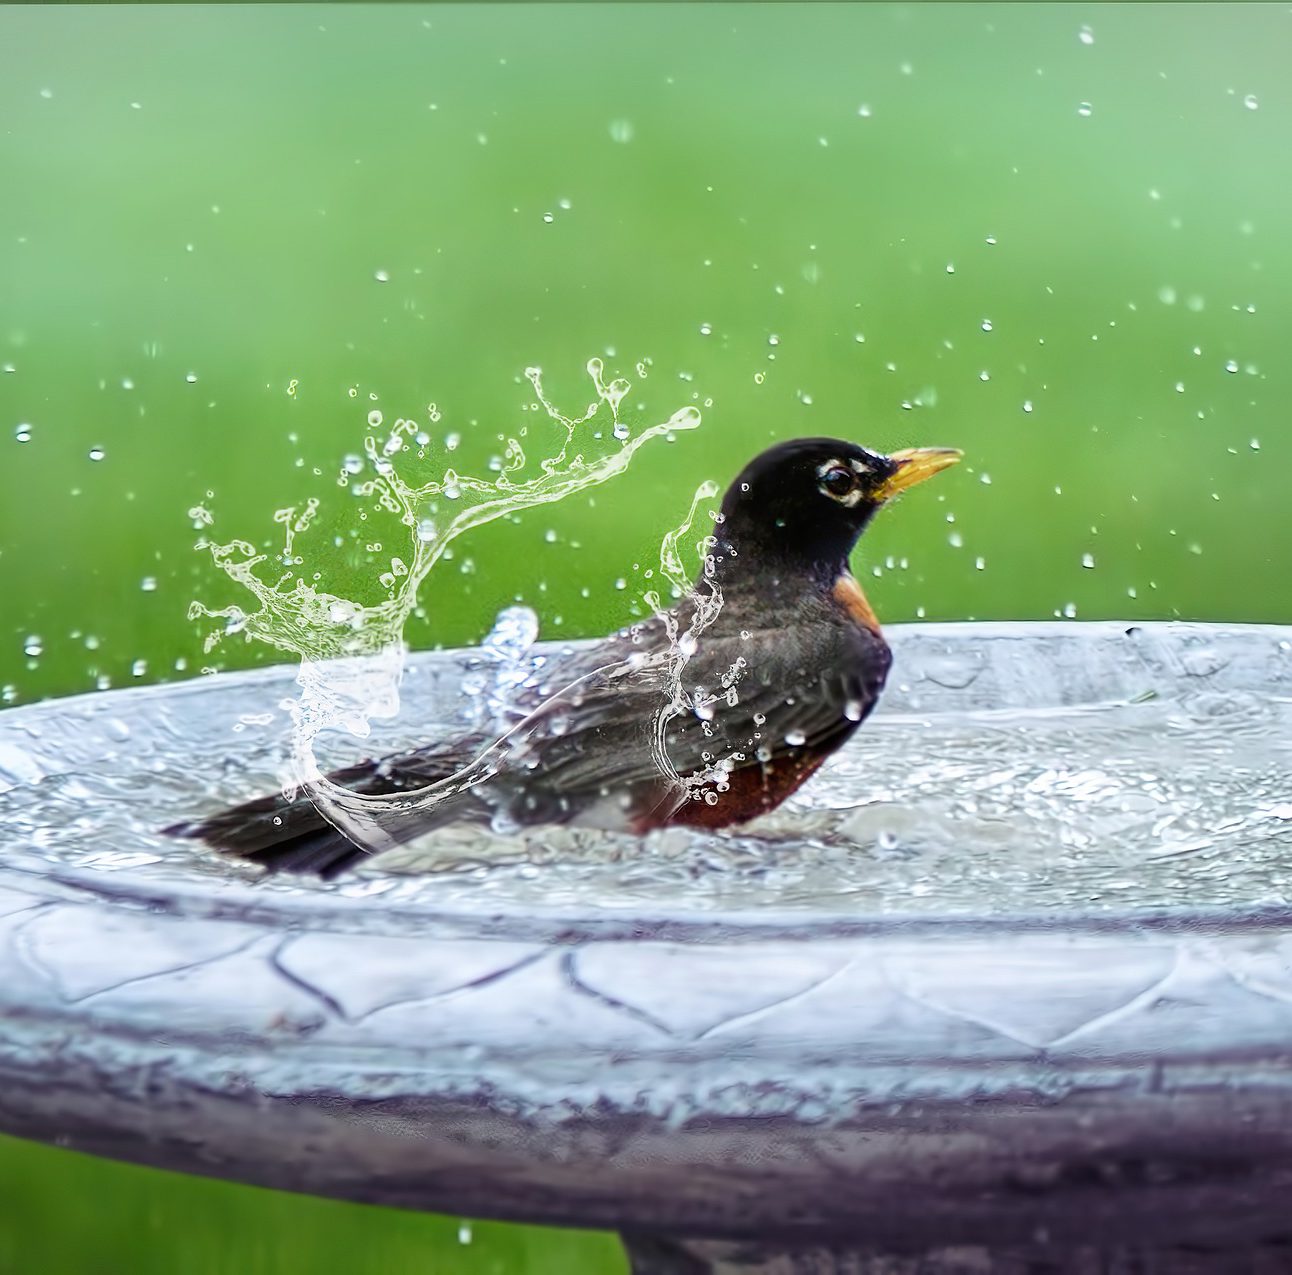 Close up of a black bird splashing in a bird bath table